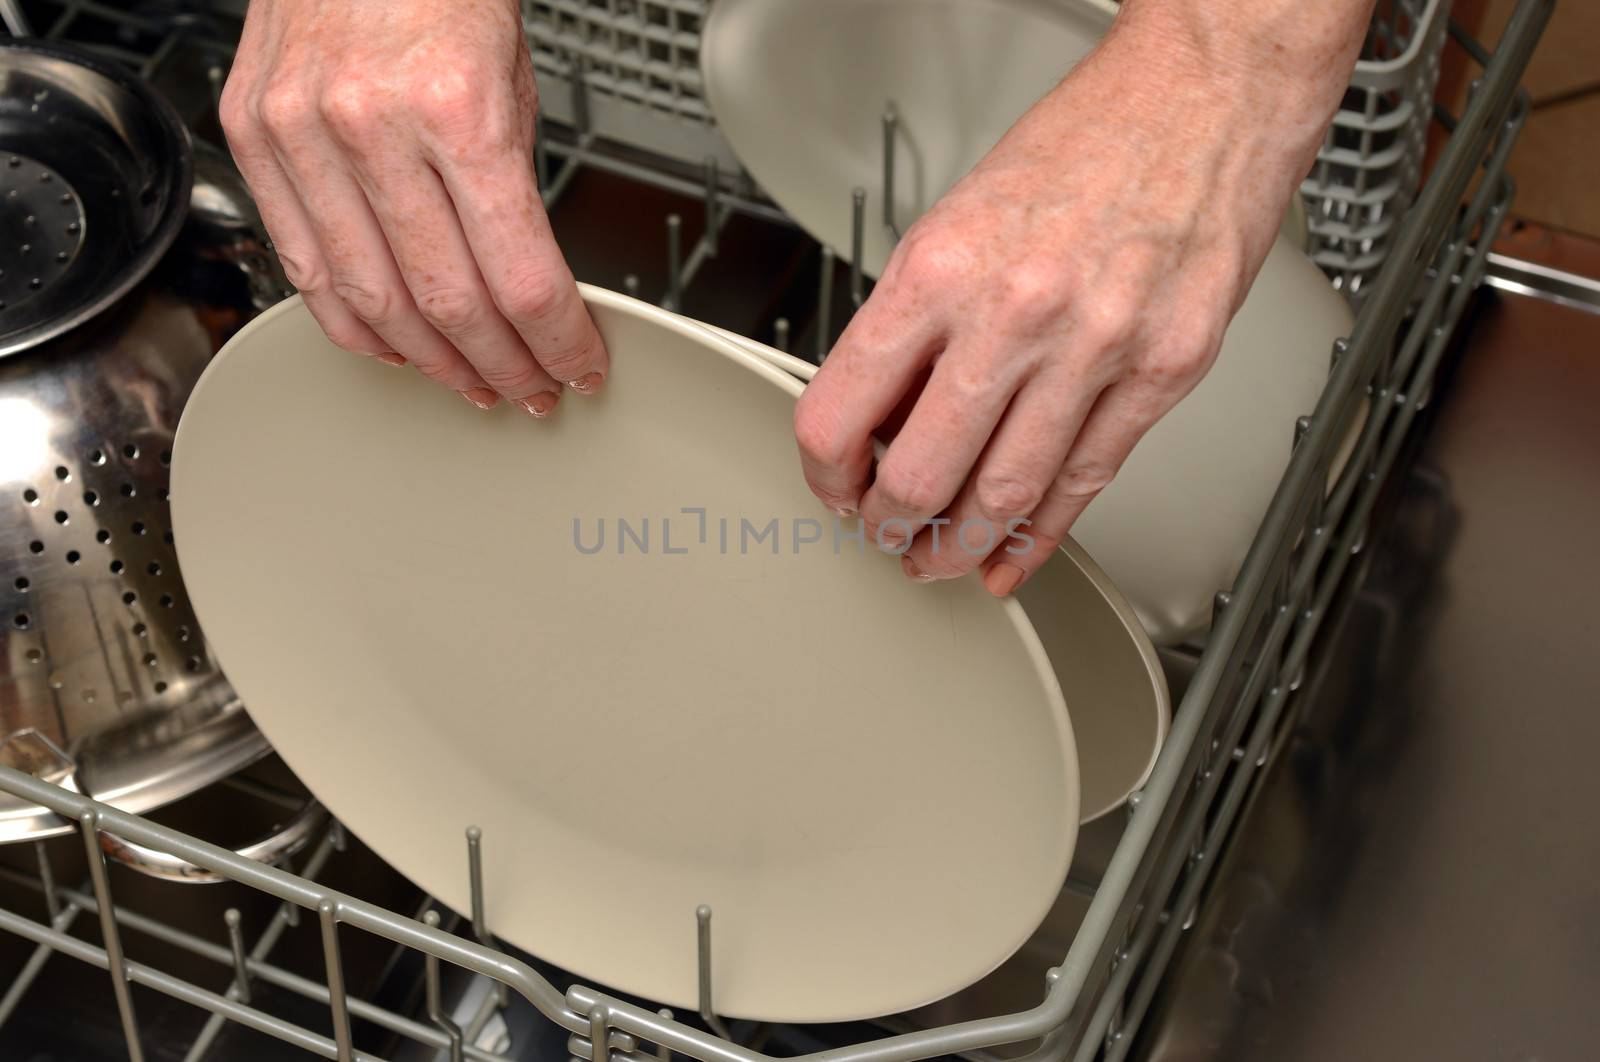 loading or unloading dishwasher by ftlaudgirl